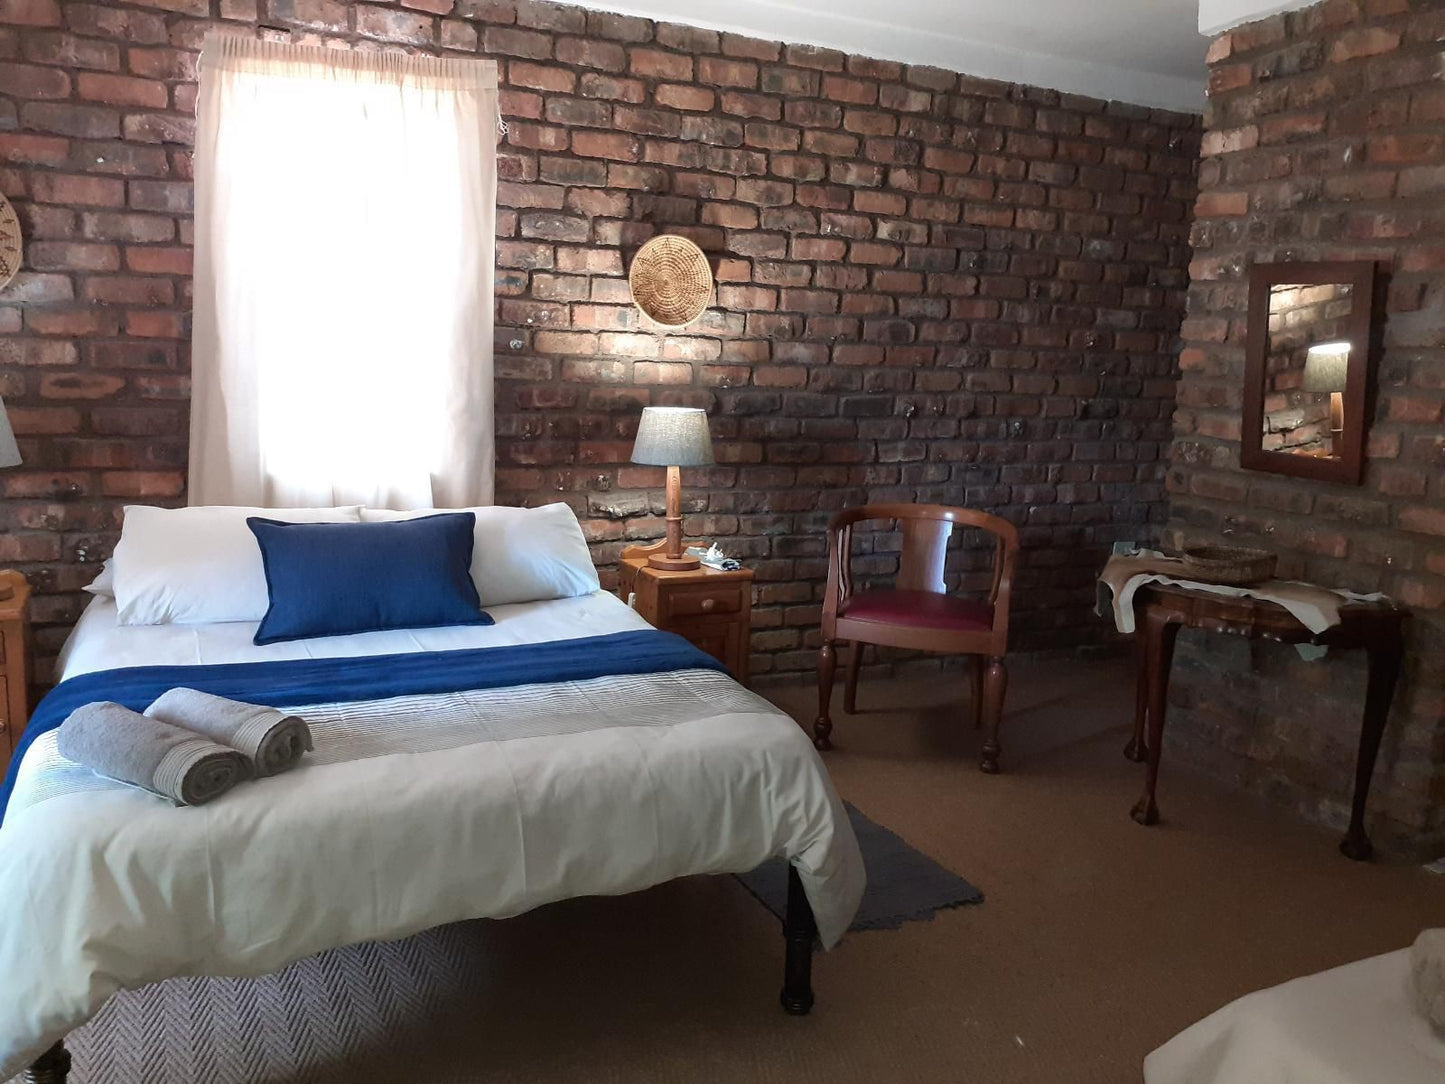 Marrick Safari Kimberley Northern Cape South Africa Bedroom, Brick Texture, Texture